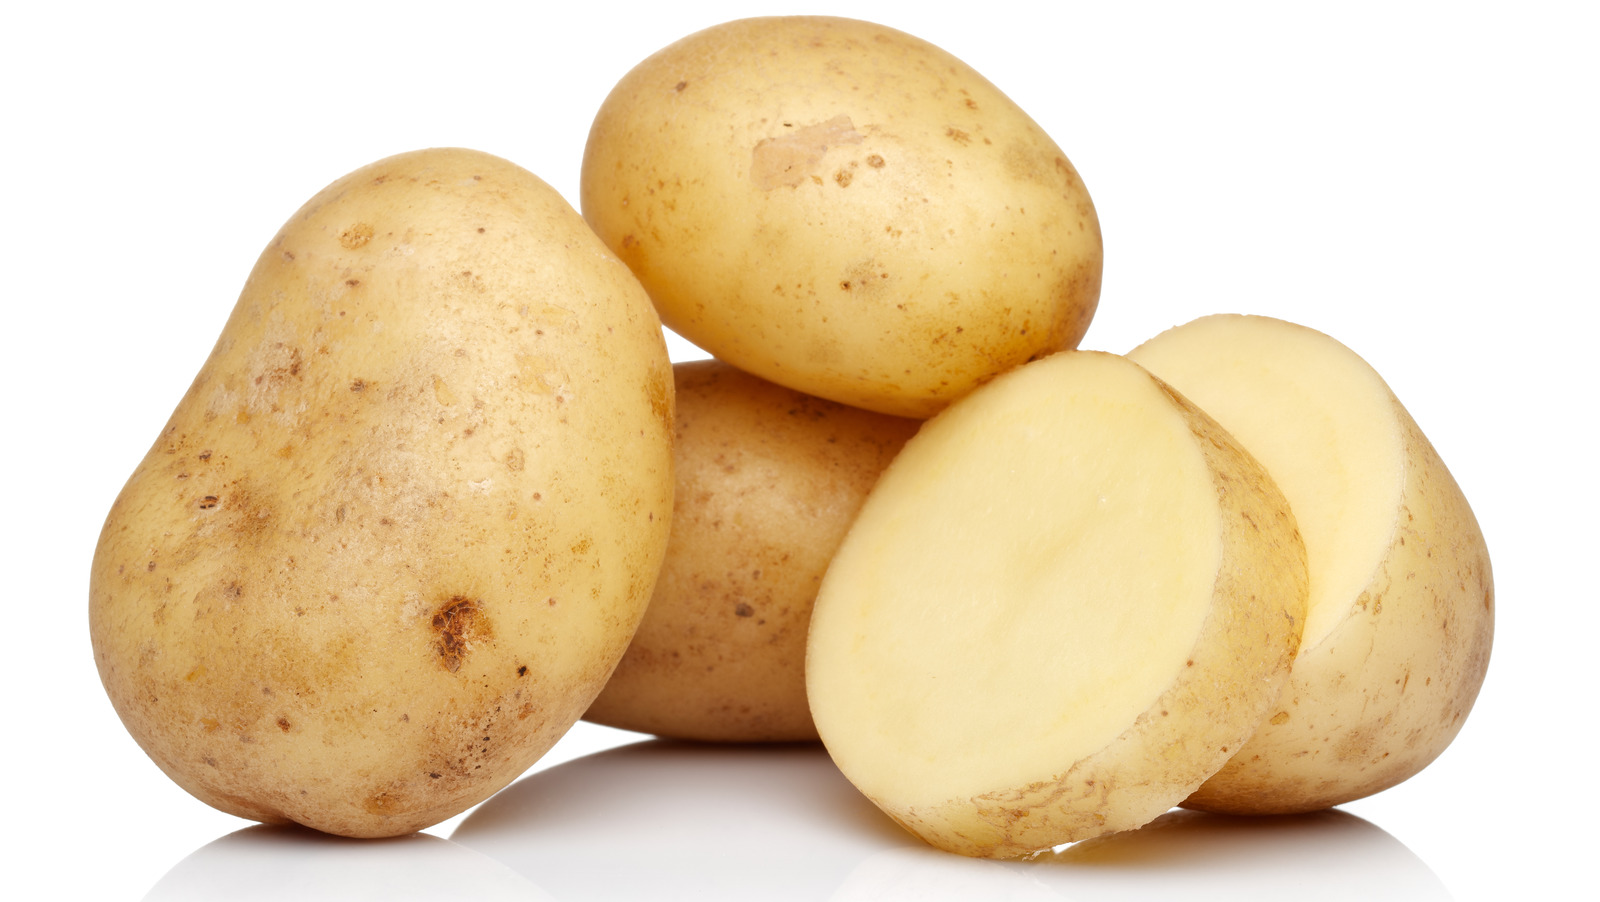 Can You Eat Raw Potatoes?